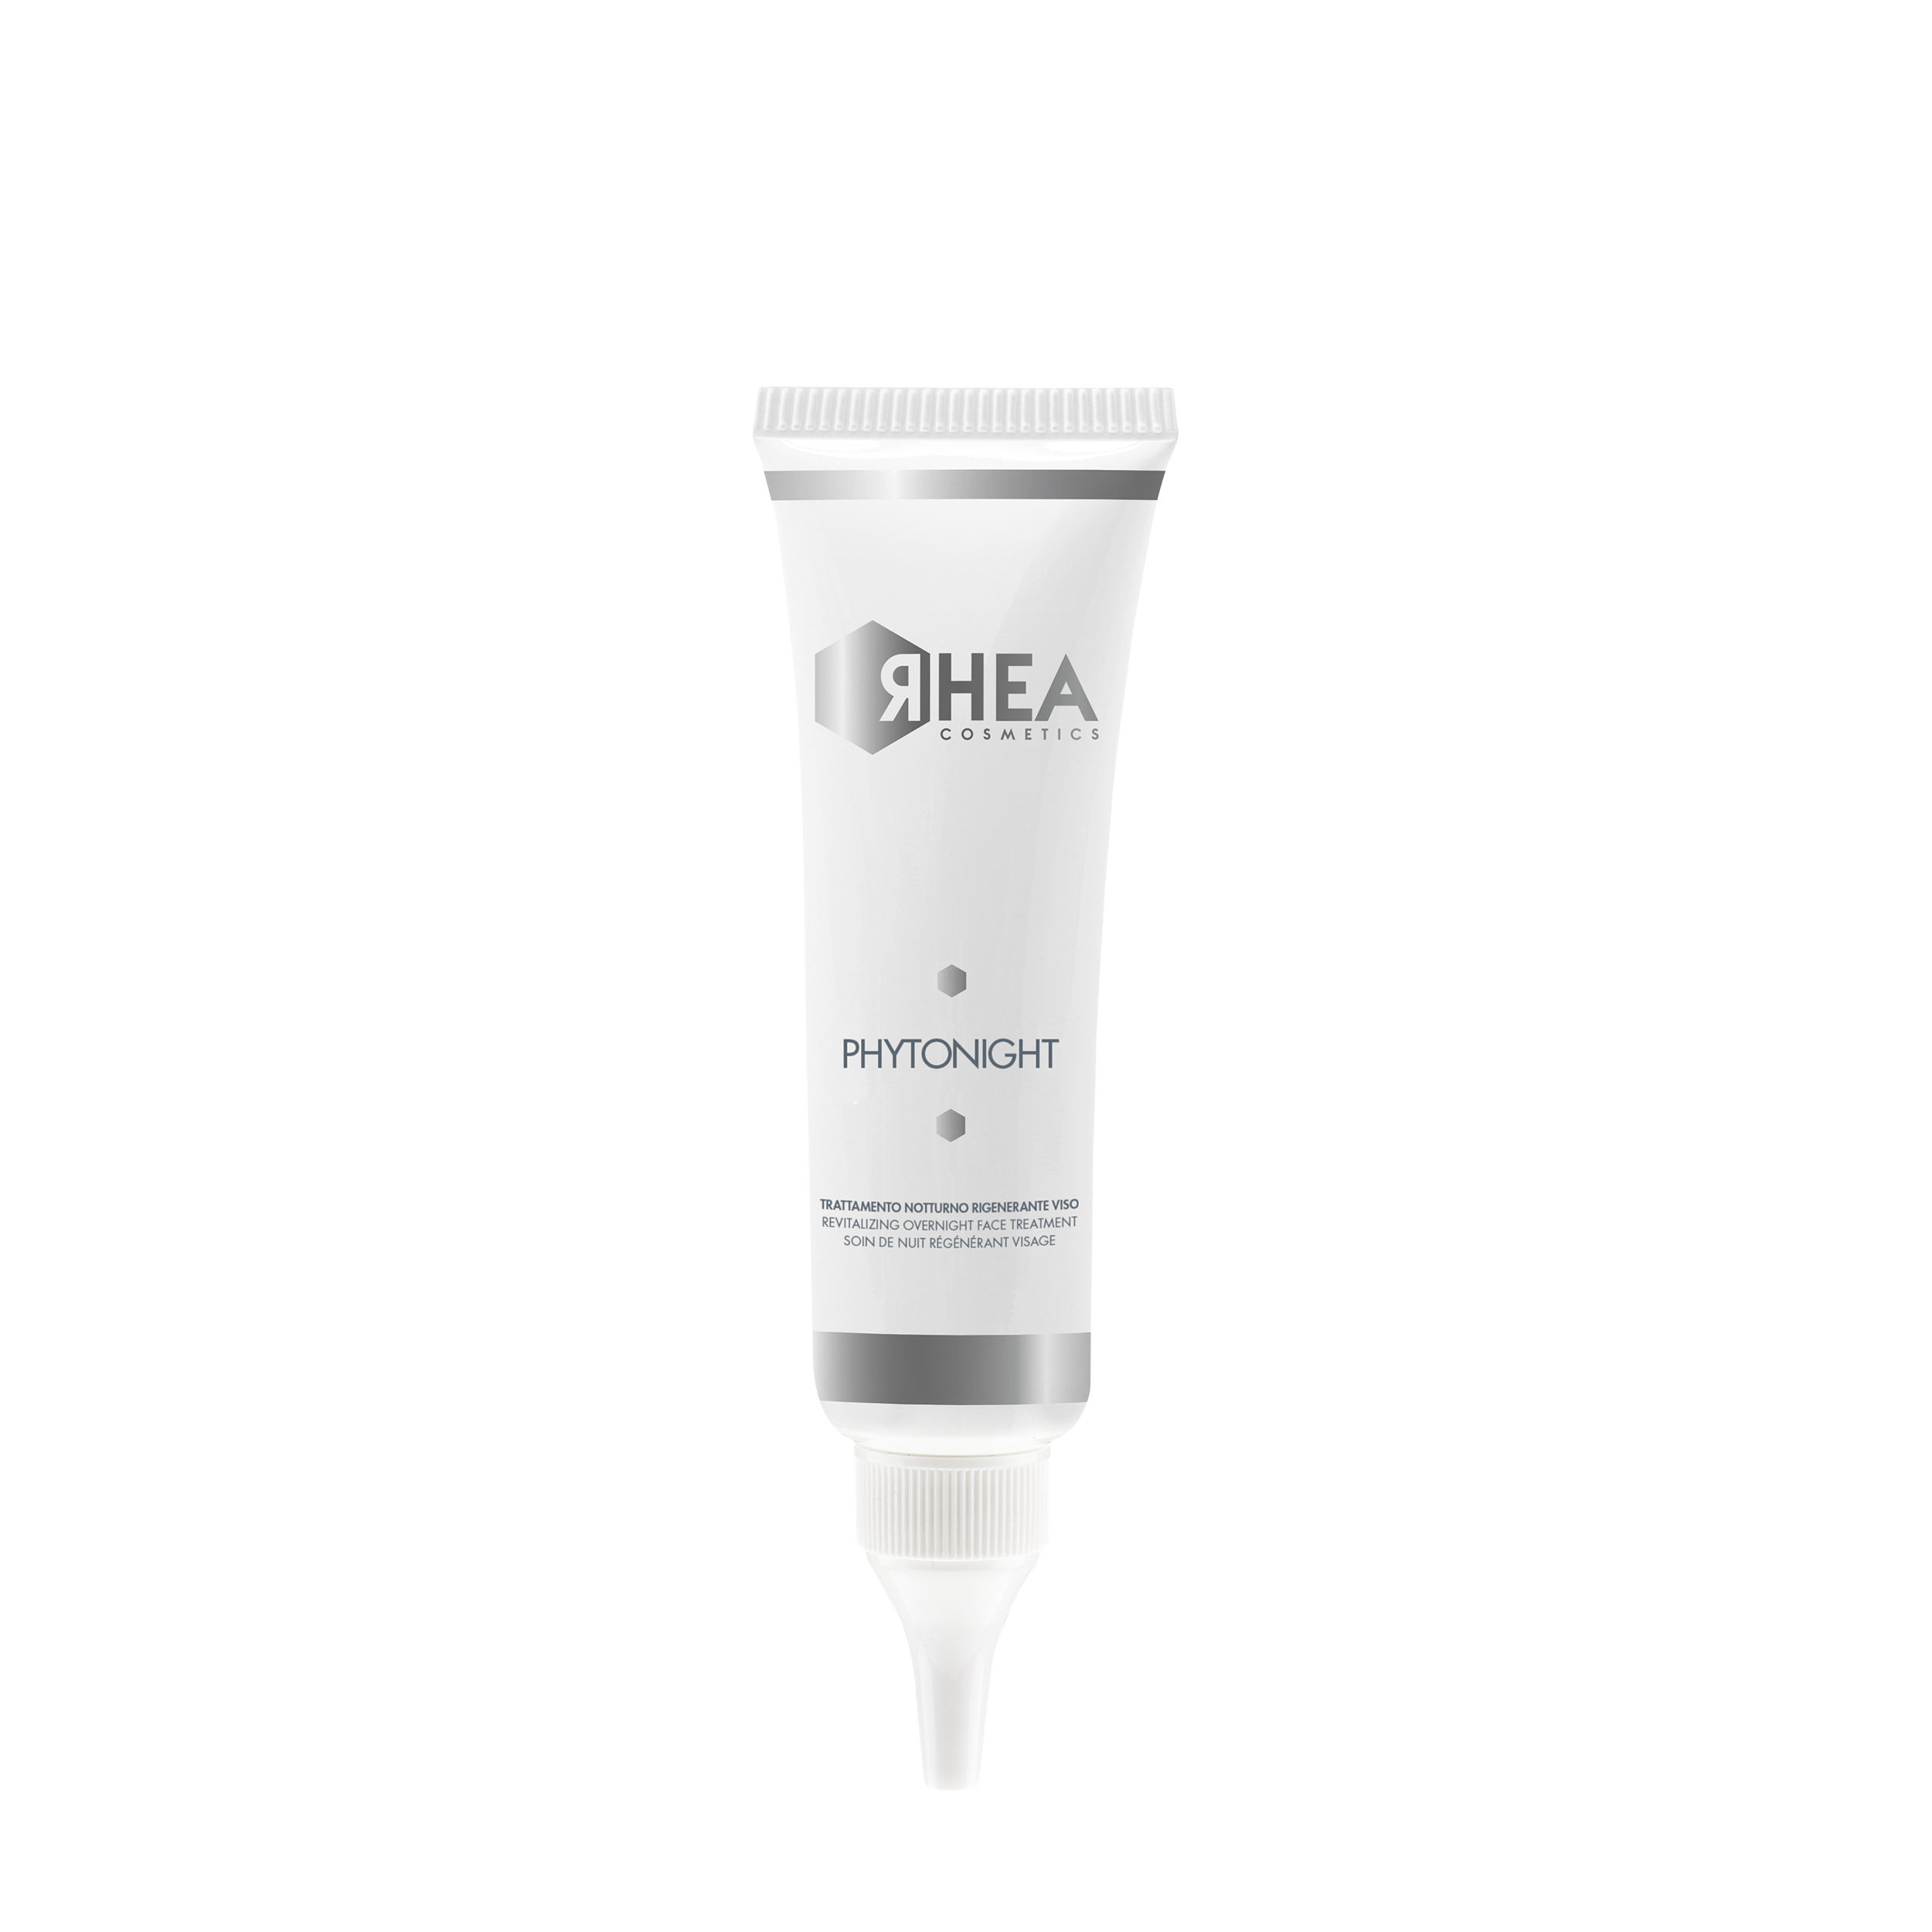 RHEA RHEA PhytoNight - Ночная интенсивно регенерирующая маска 50 мл 50 мл P5514151 - фото 1